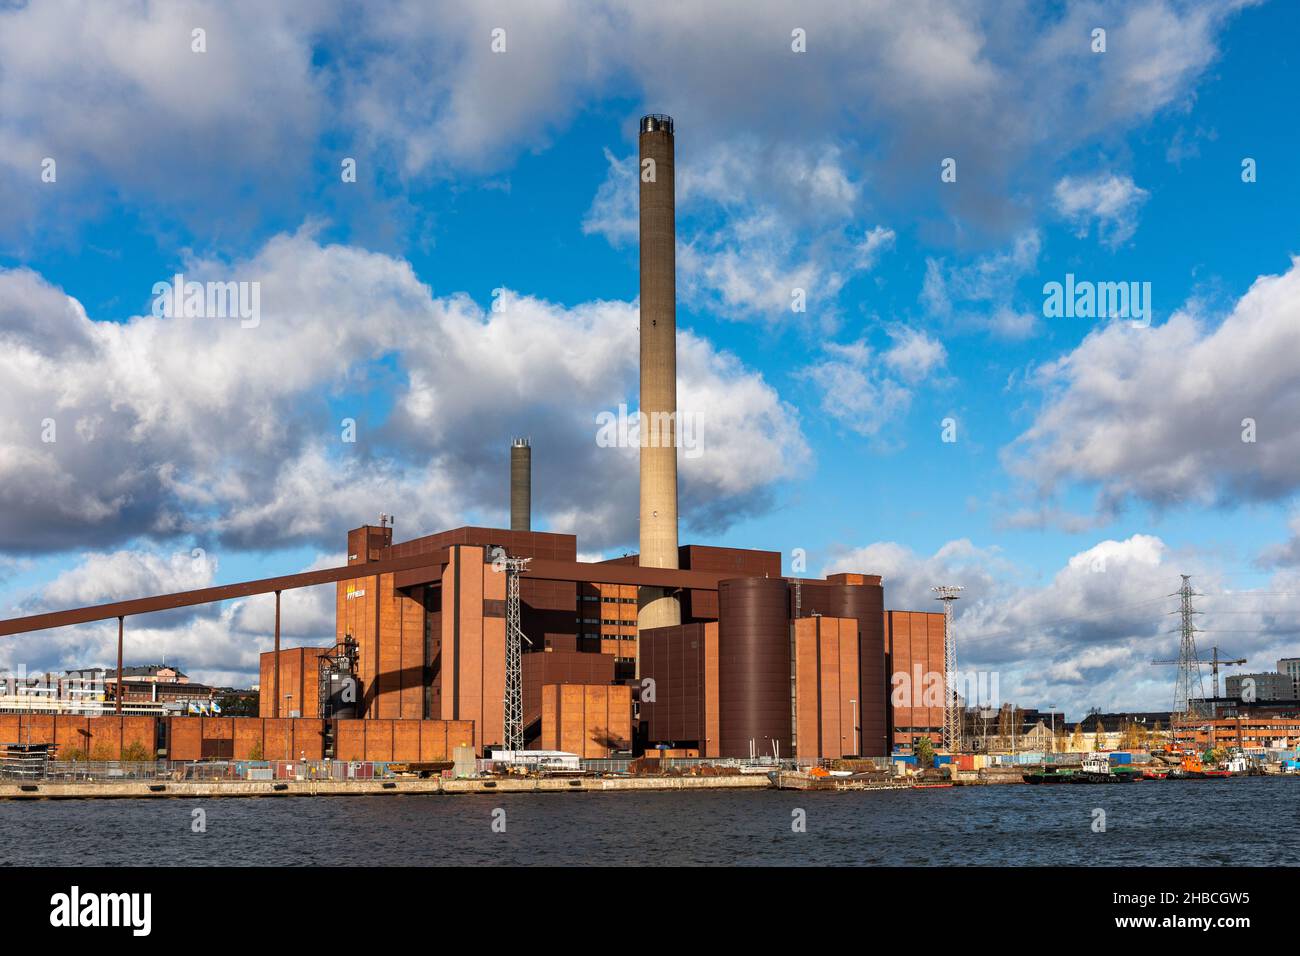 Hanasaaren voimalaitos or Hasanaari coal-fired power plant in Helsinki, Finland Stock Photo